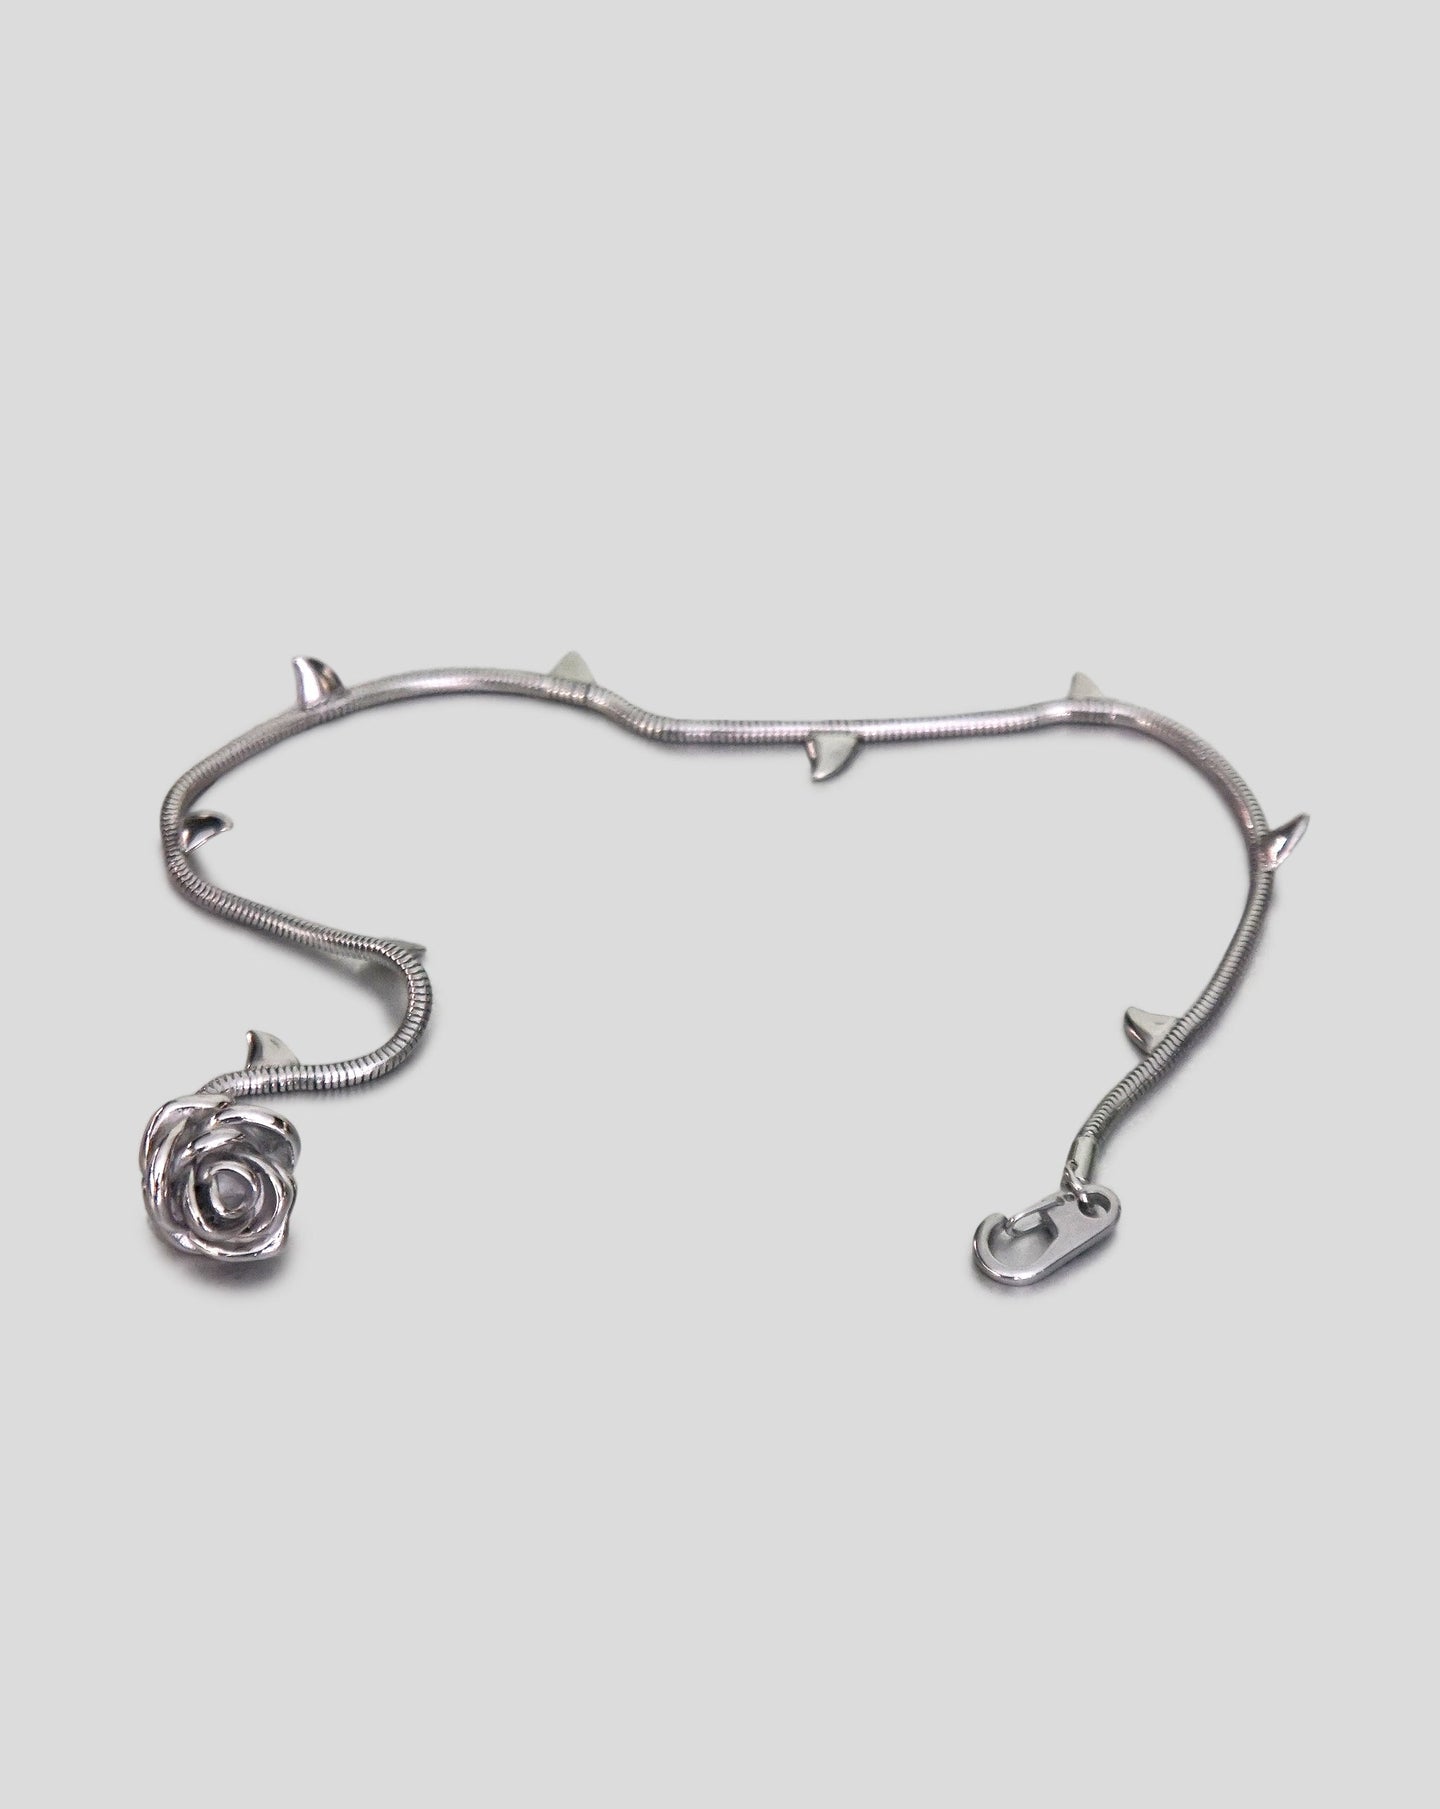 Silver Rosebud Necklace